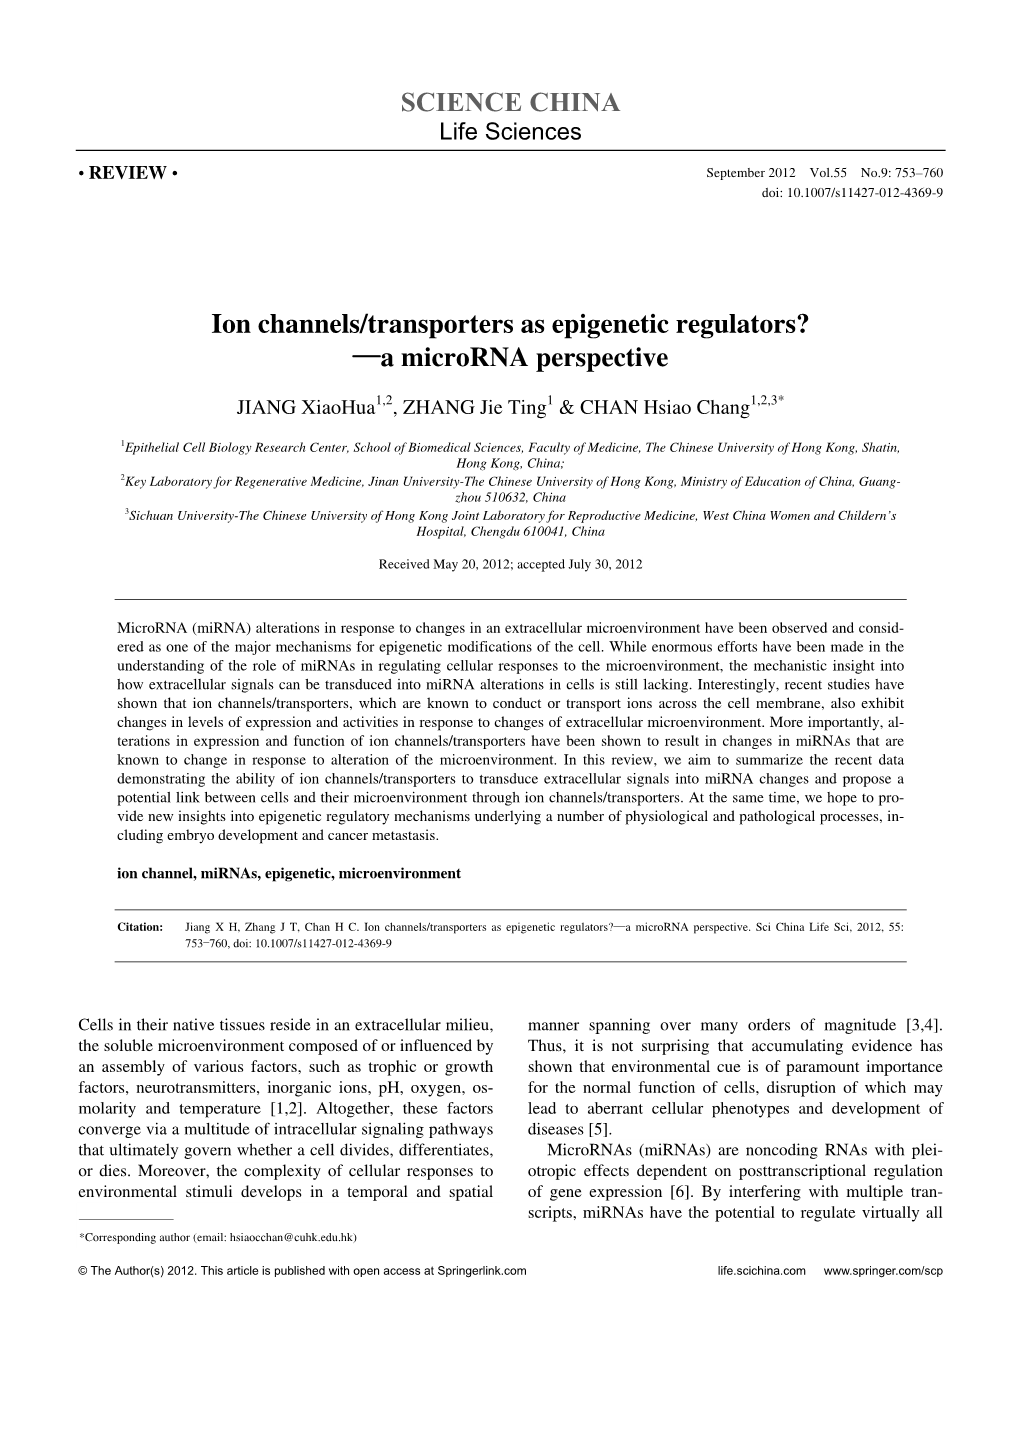 Ion Channels/Transporters As Epigenetic Regulators?—A Microrna Perspective